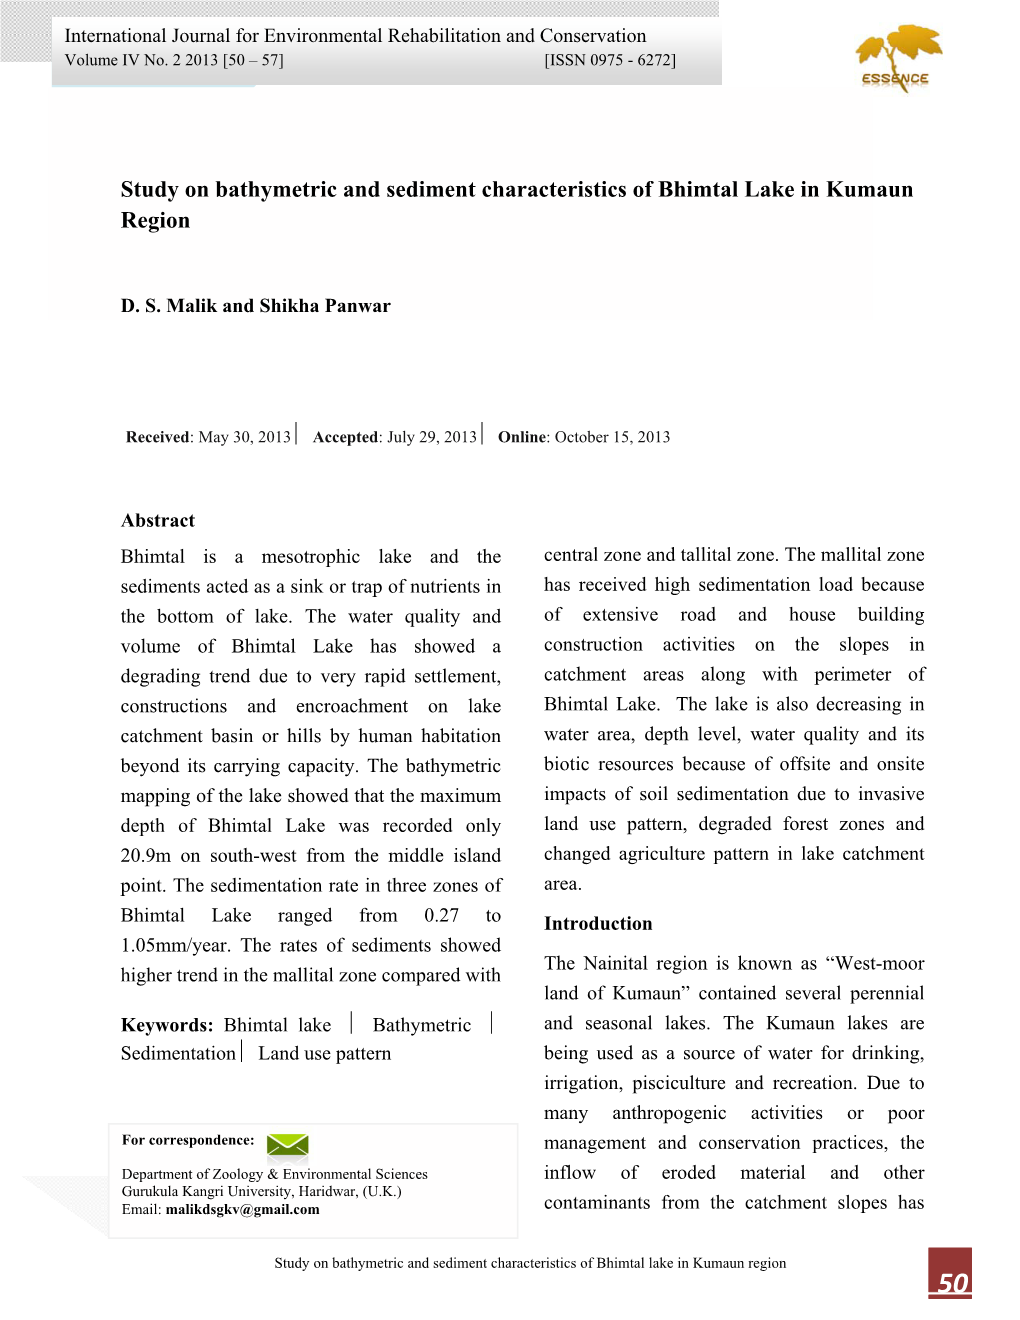 Study on Bathymetric and Sediment Characteristics of Bhimtal Lake in Kumaun Region